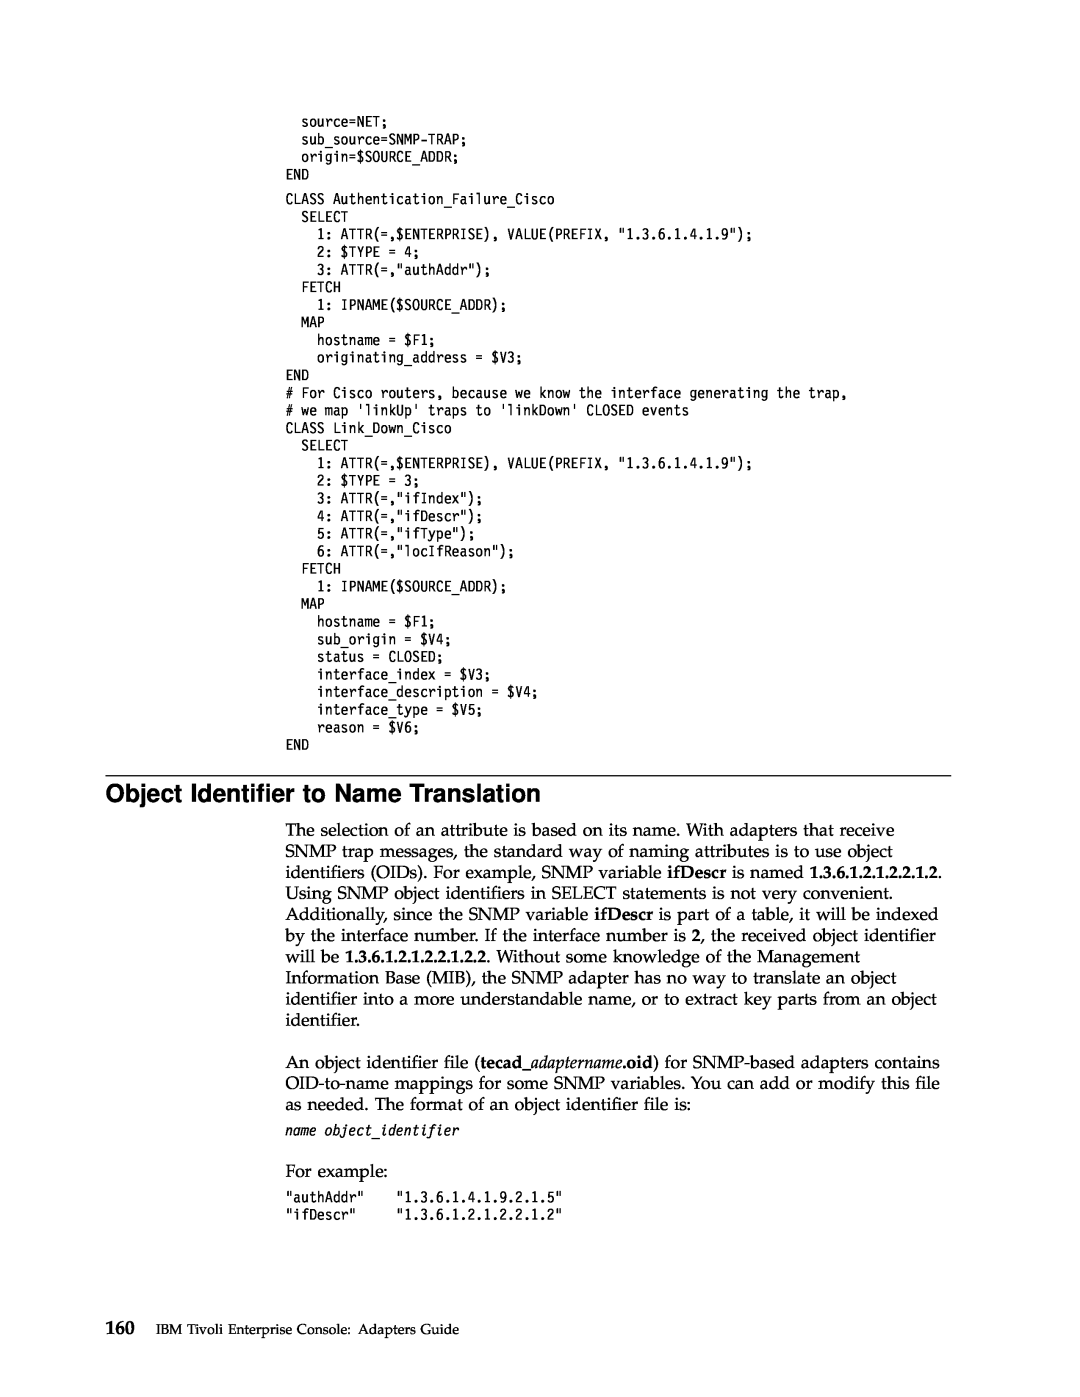 IBM Enterprise Console manual Object Identifier to Name Translation, name objectidentifier 